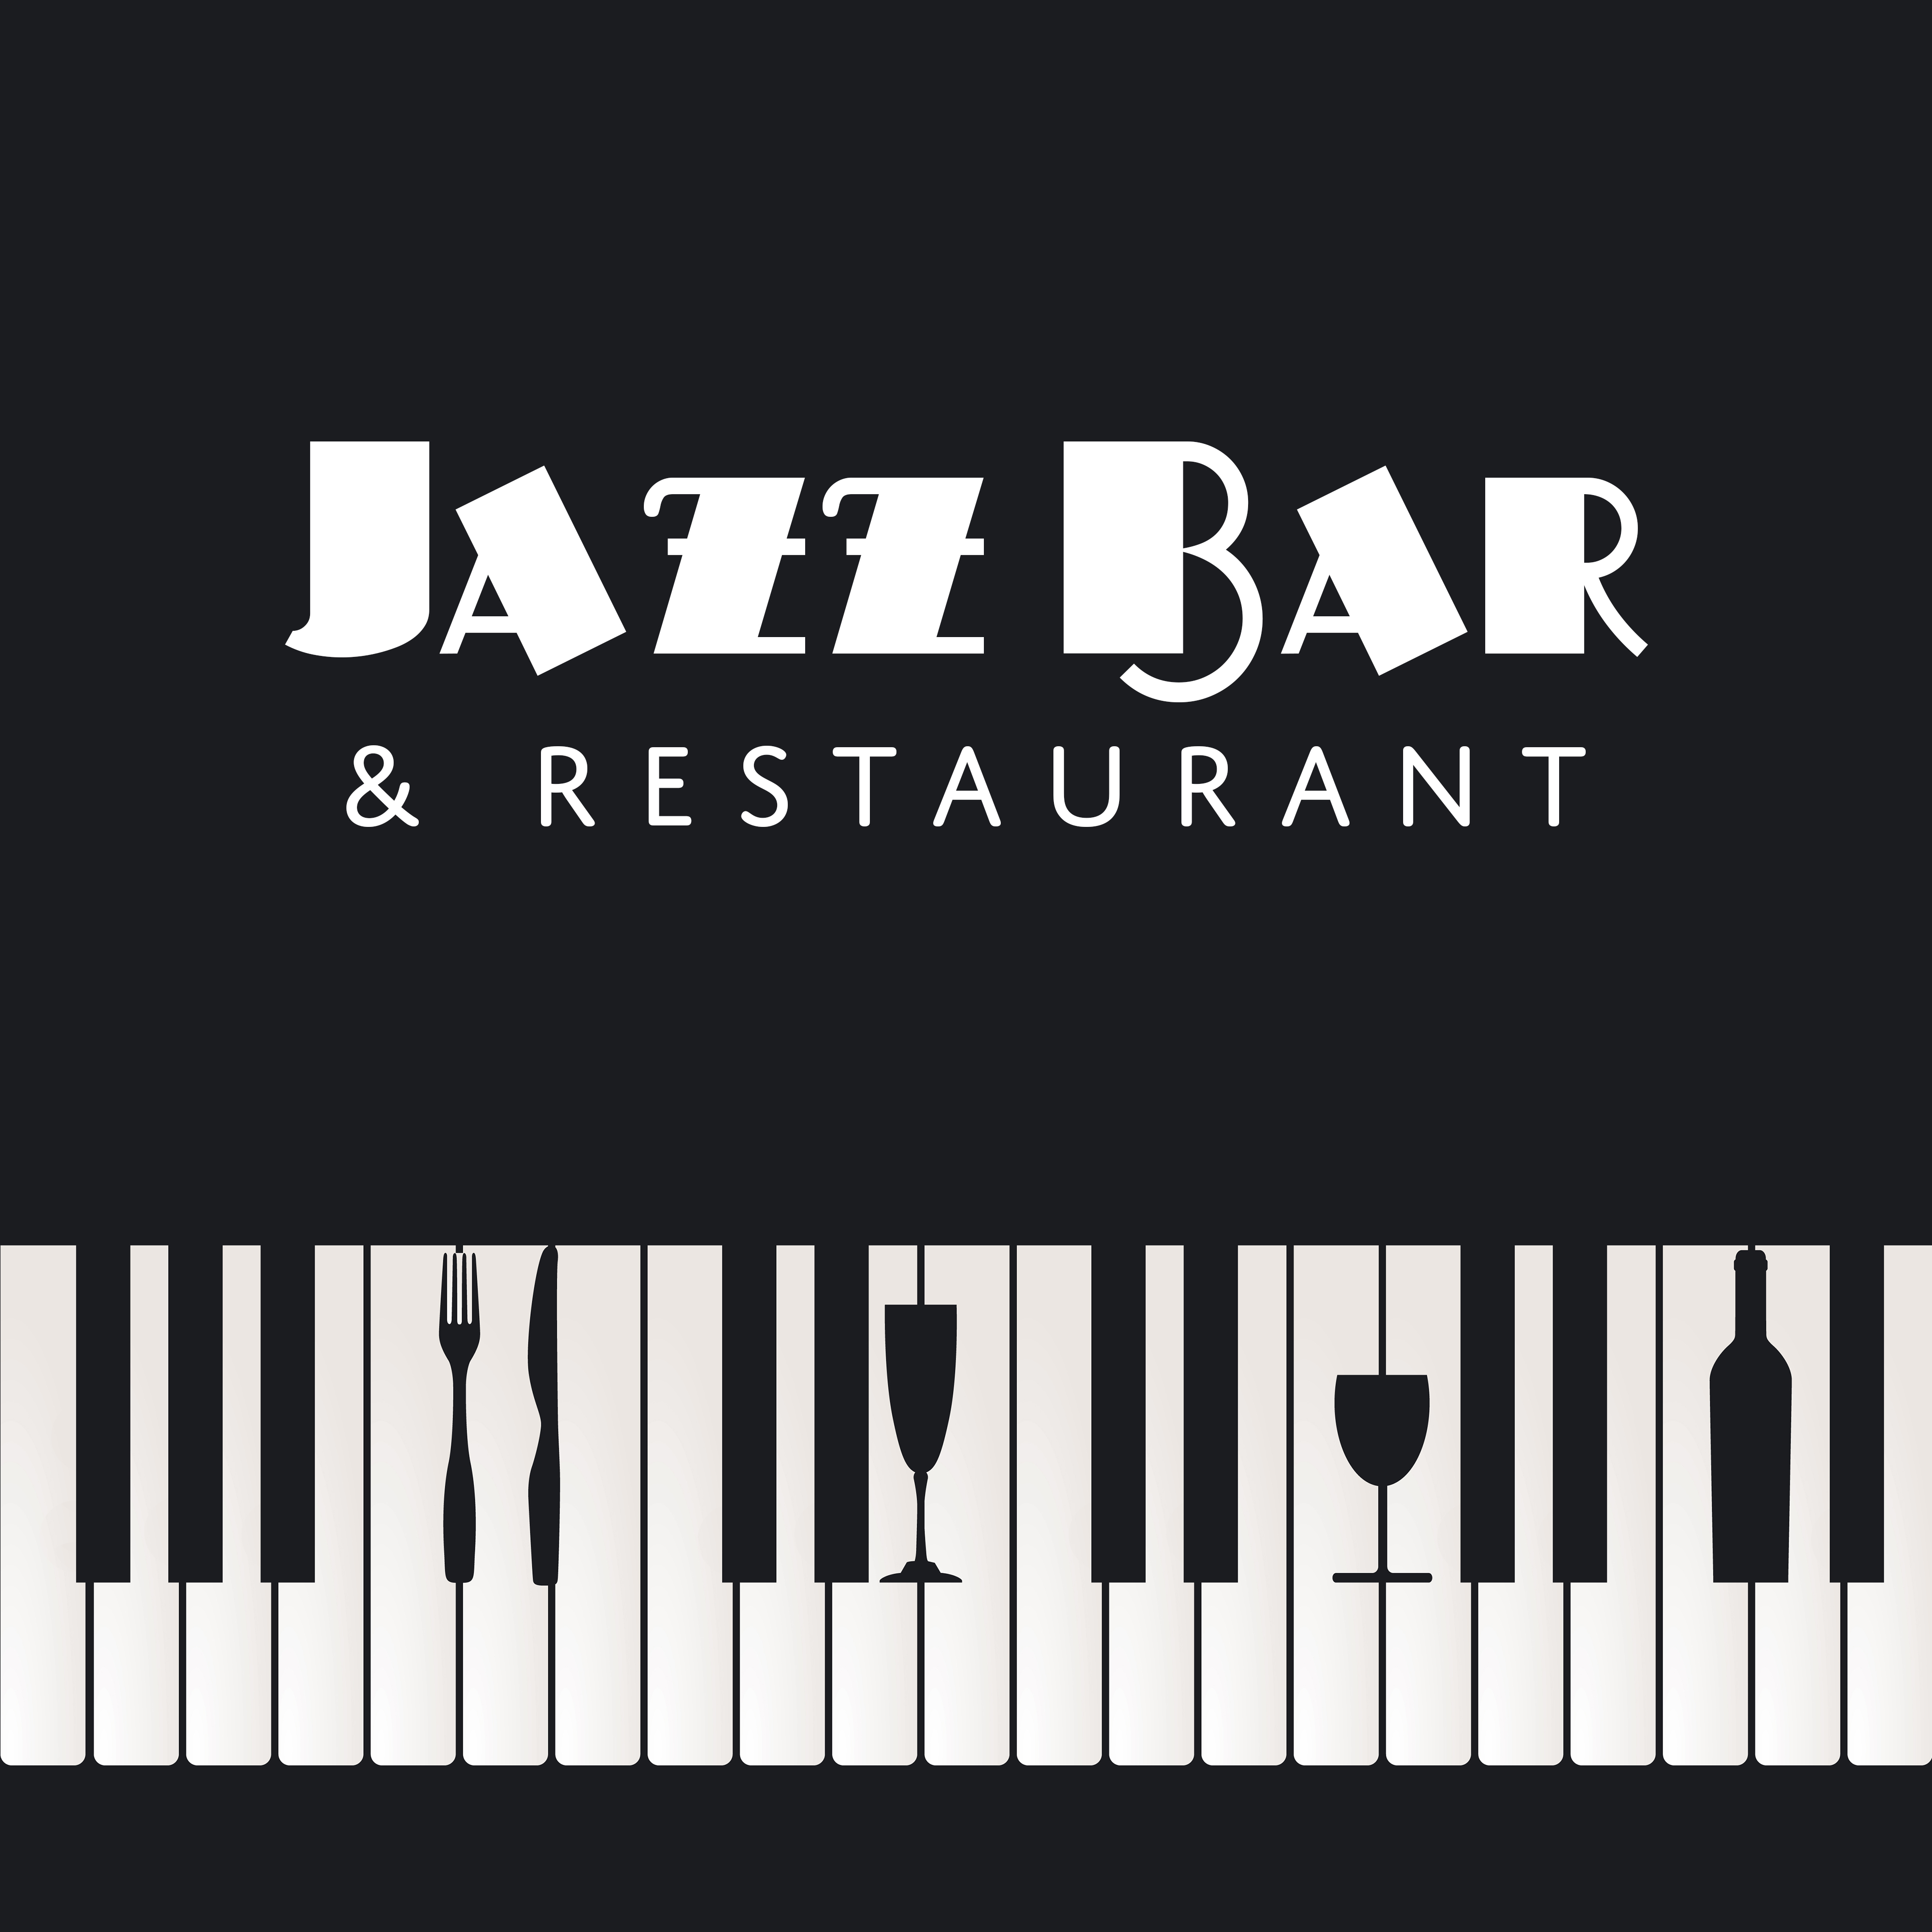 Jazz Bar & Restaurant